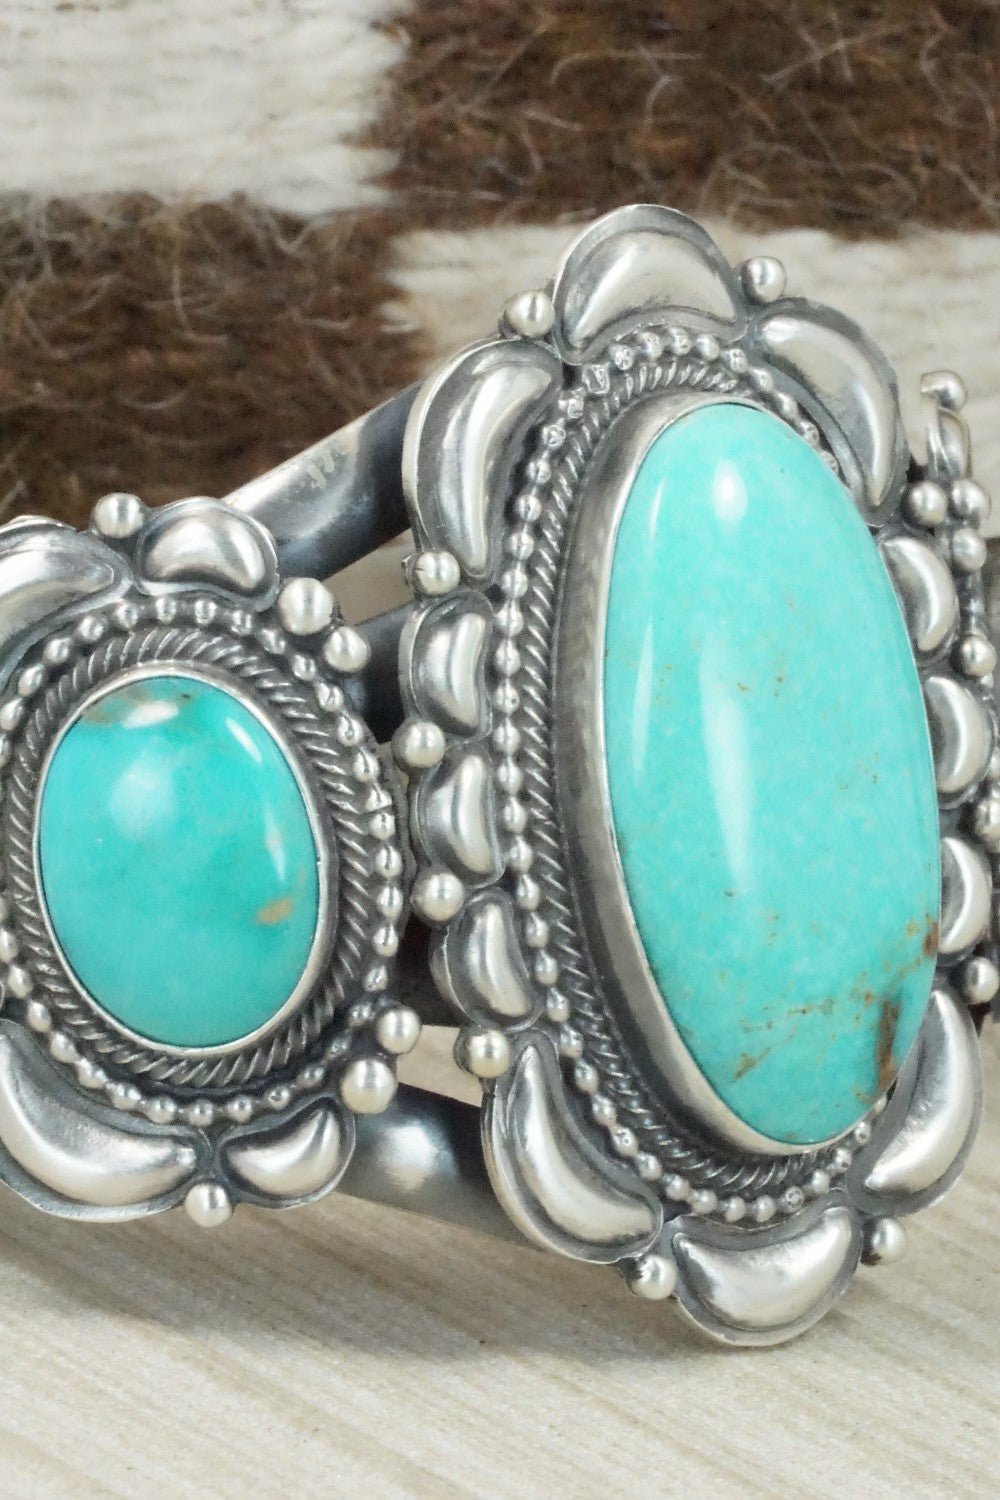 Turquoise & Sterling Silver Bracelet - Tom Lewis